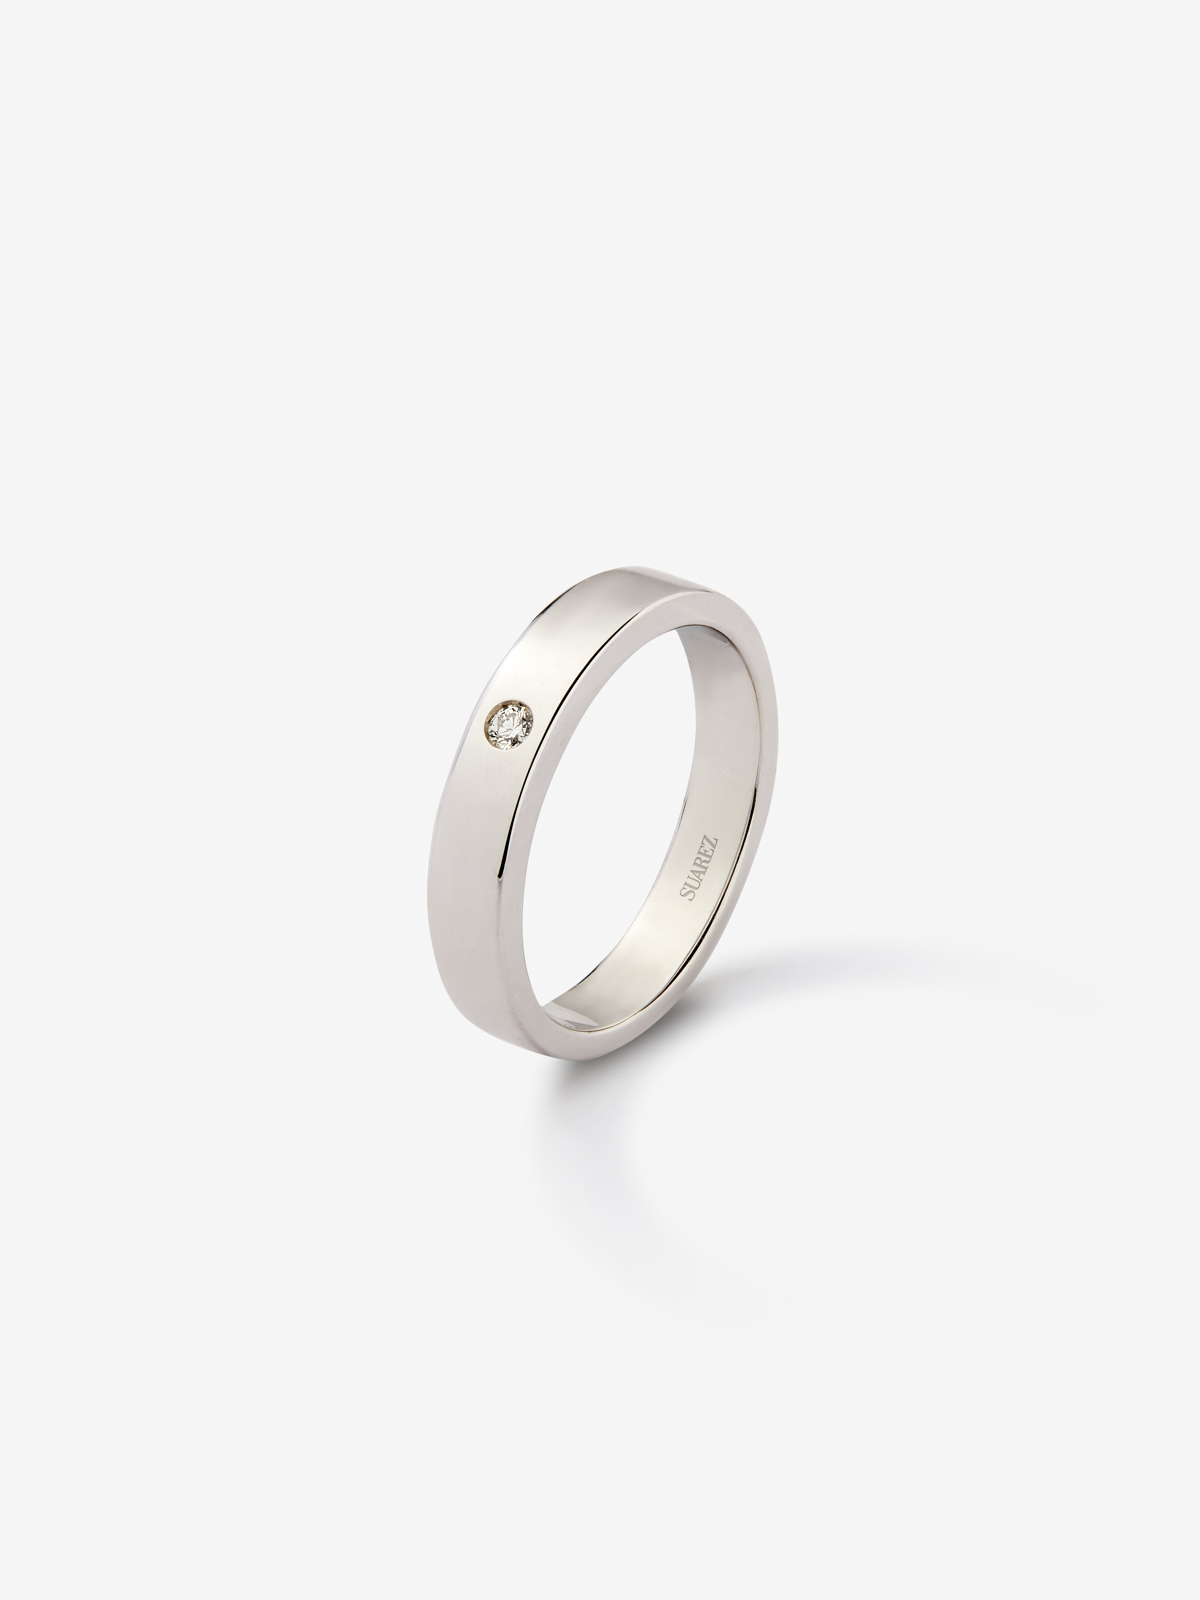 18K White Gold Wedding Alliance Ring with Diamond